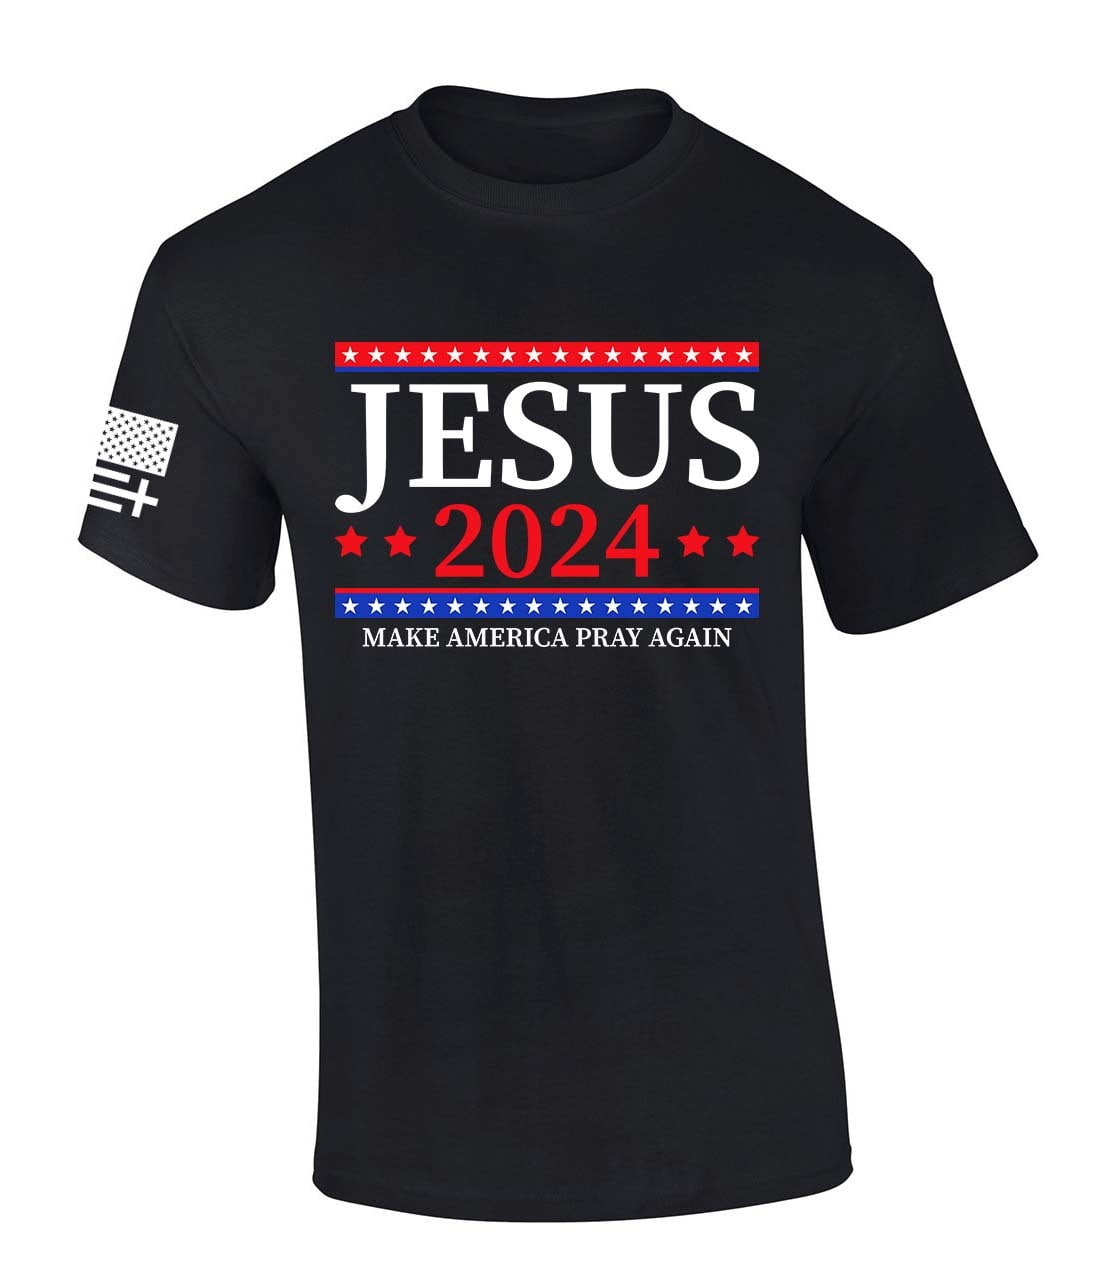 Mens Christian Tshirt Jesus 2024 Make America Pray Again Short Sleeve T ...